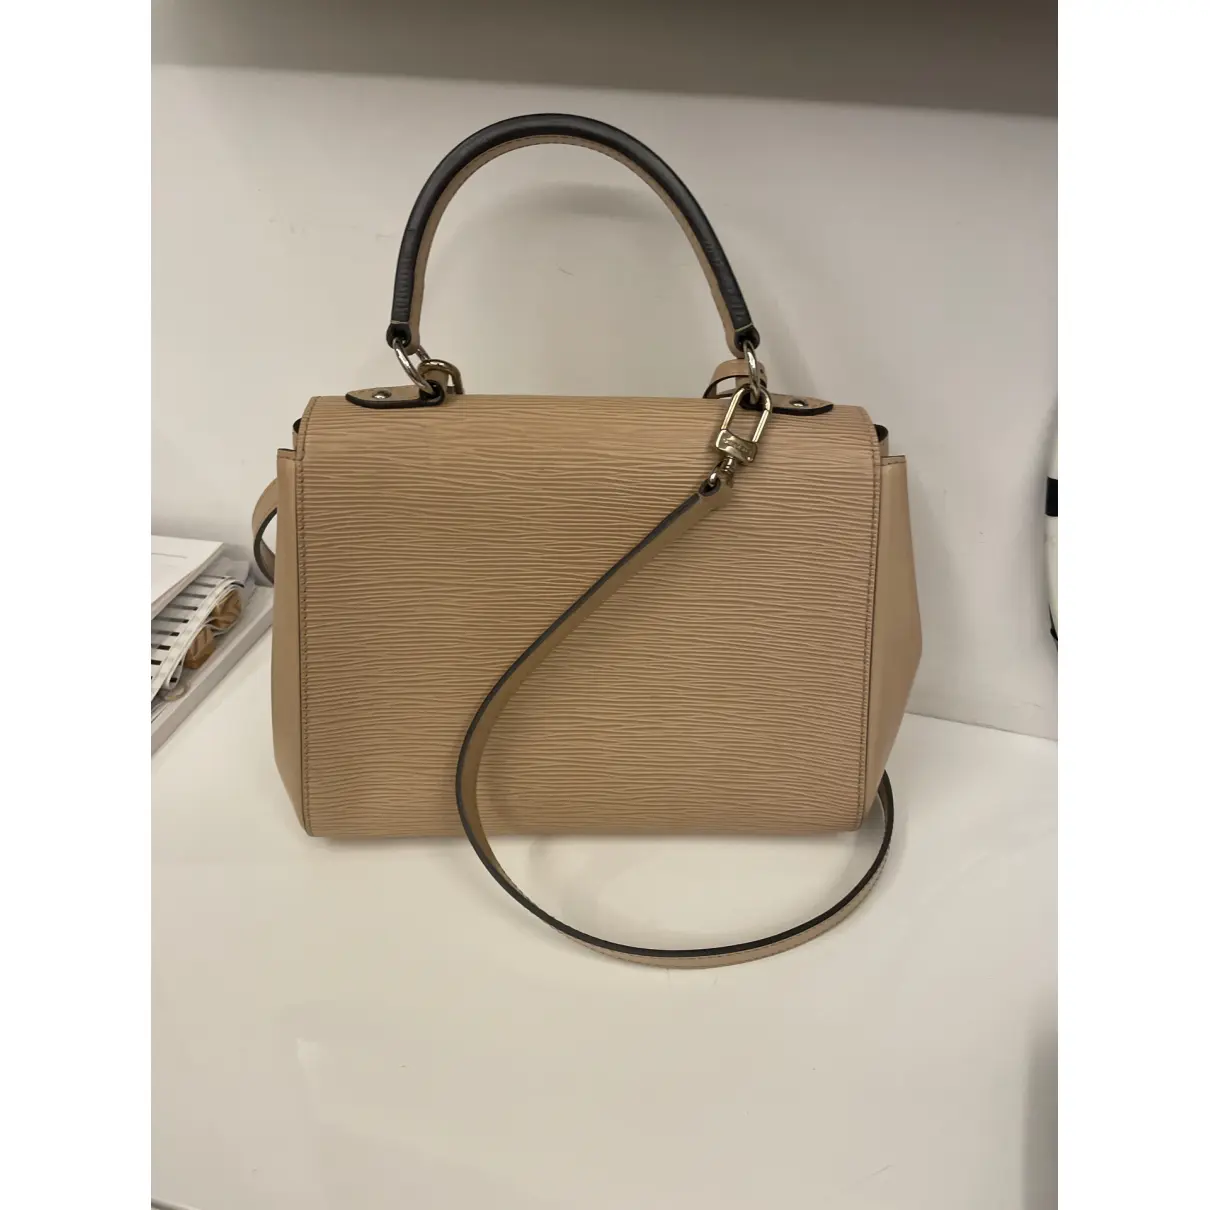 Buy Louis Vuitton Cluny leather handbag online